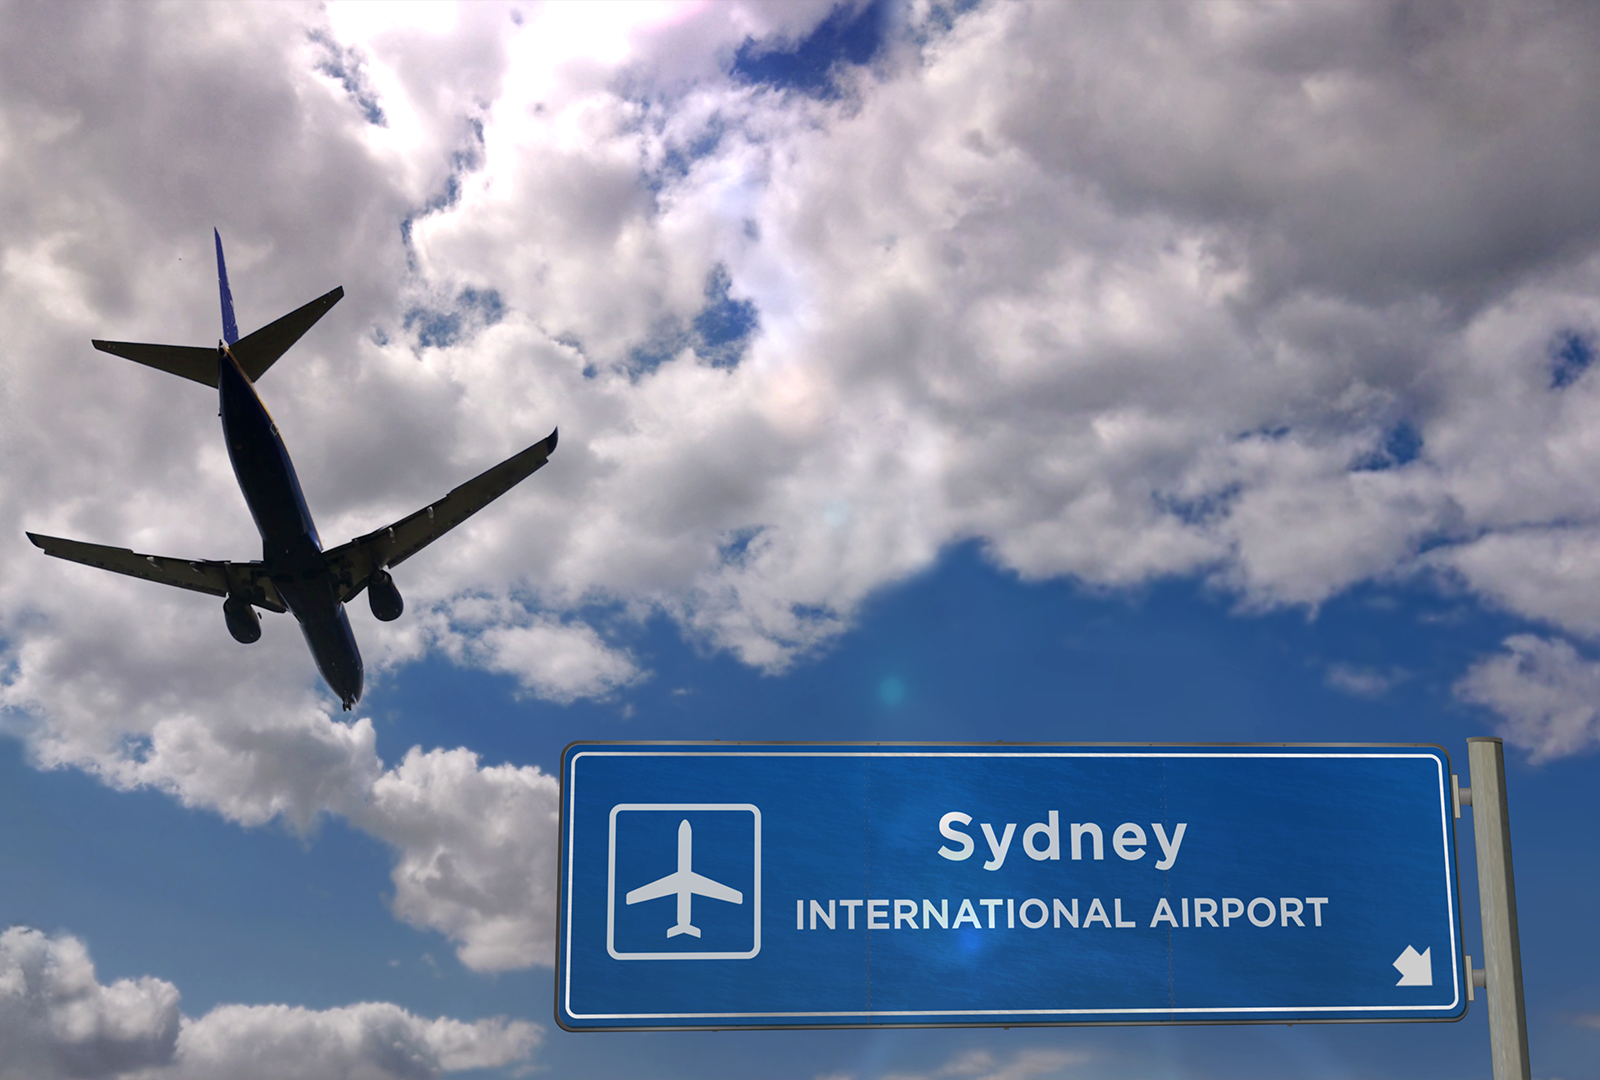 SydneyAirport